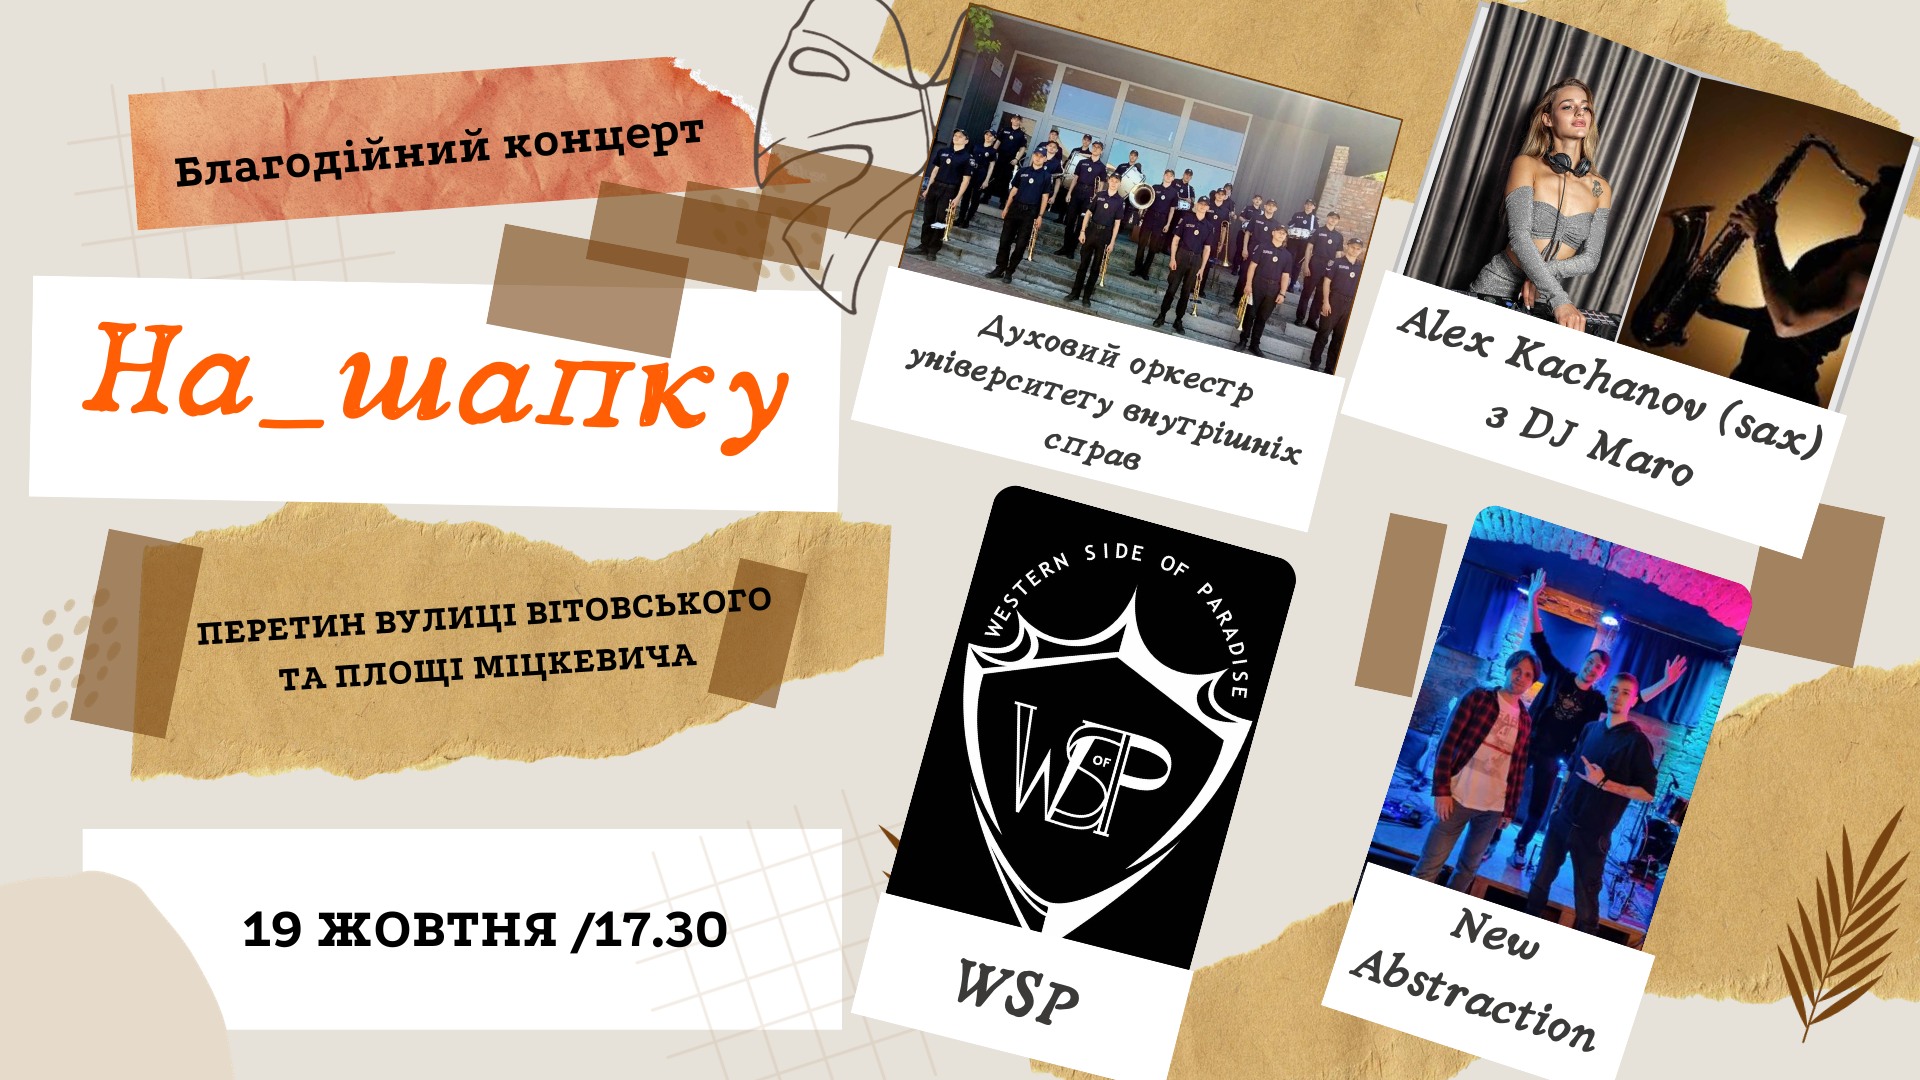 На_шапку-2023: Духовий оркестр / Alex Kachanov / DJ Maro / WSP / New Abstraction